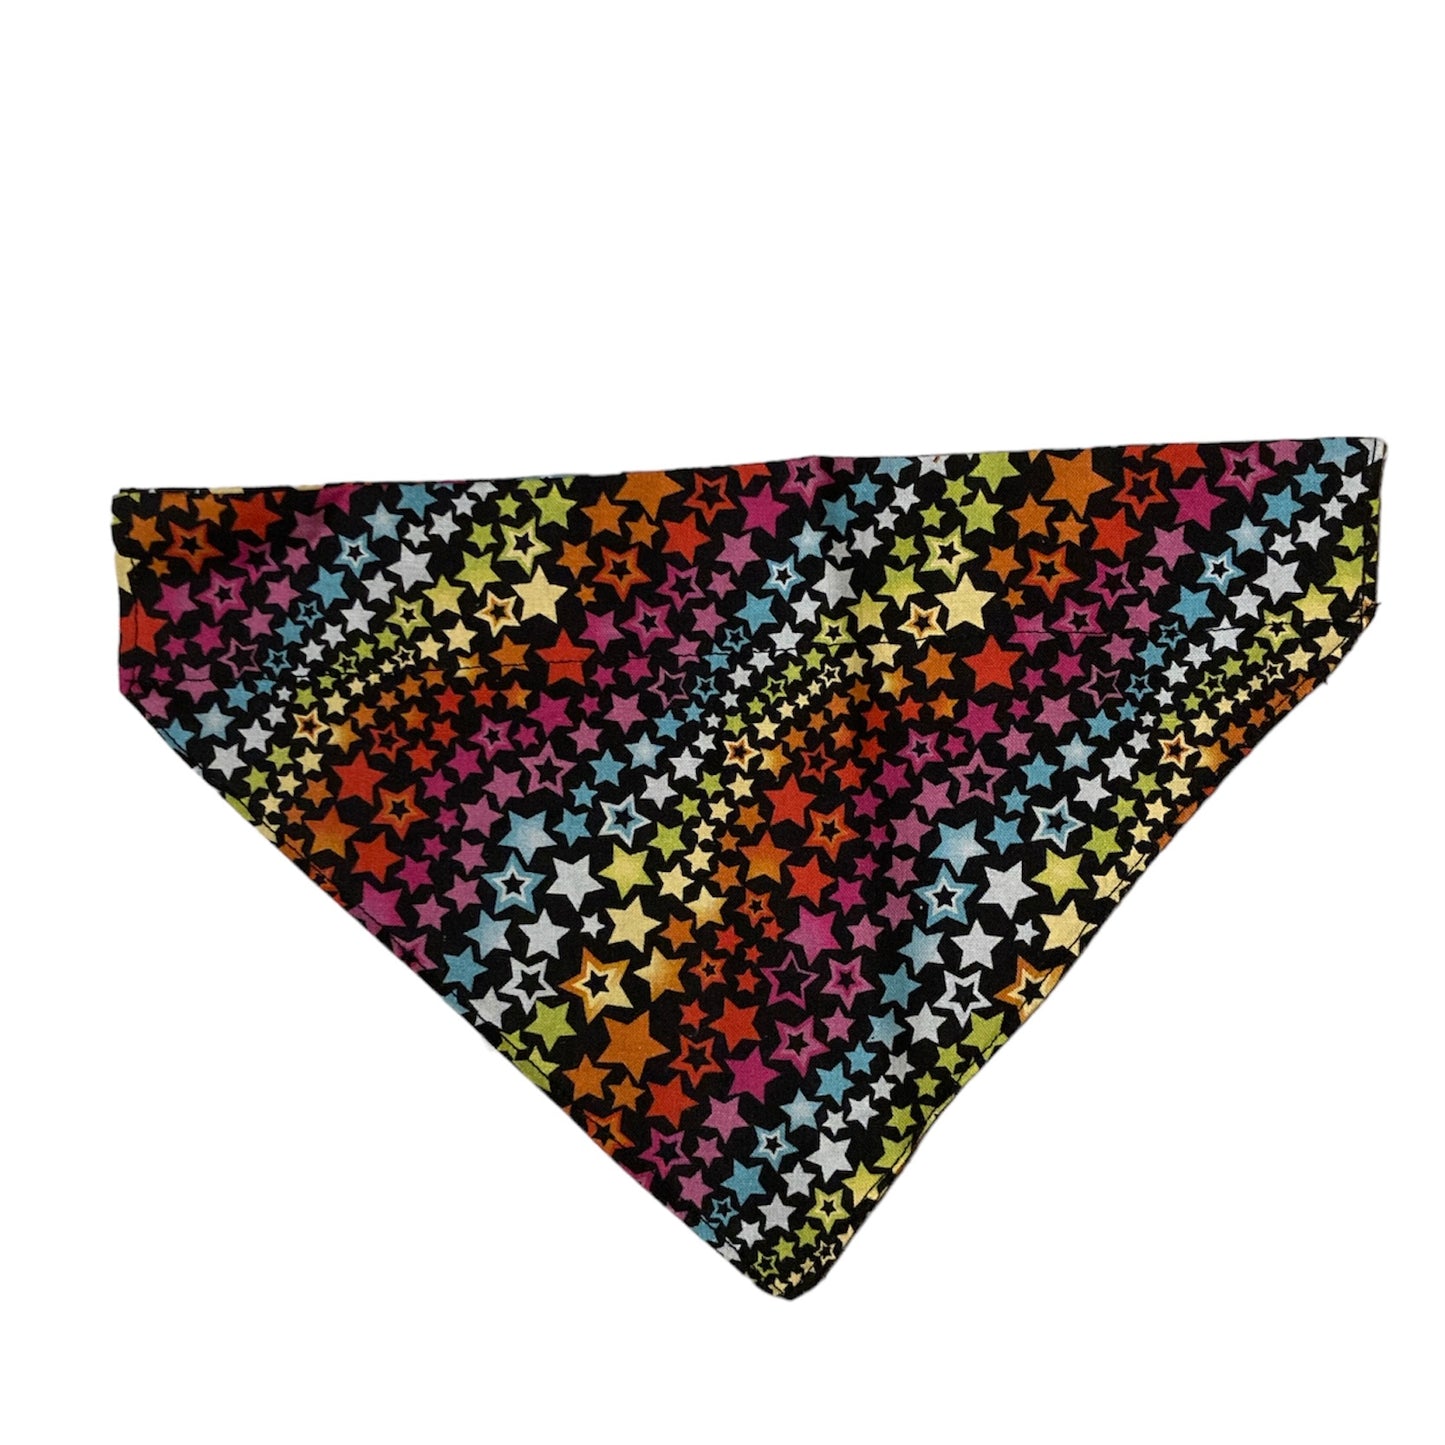 Rainbow stars dog bandana